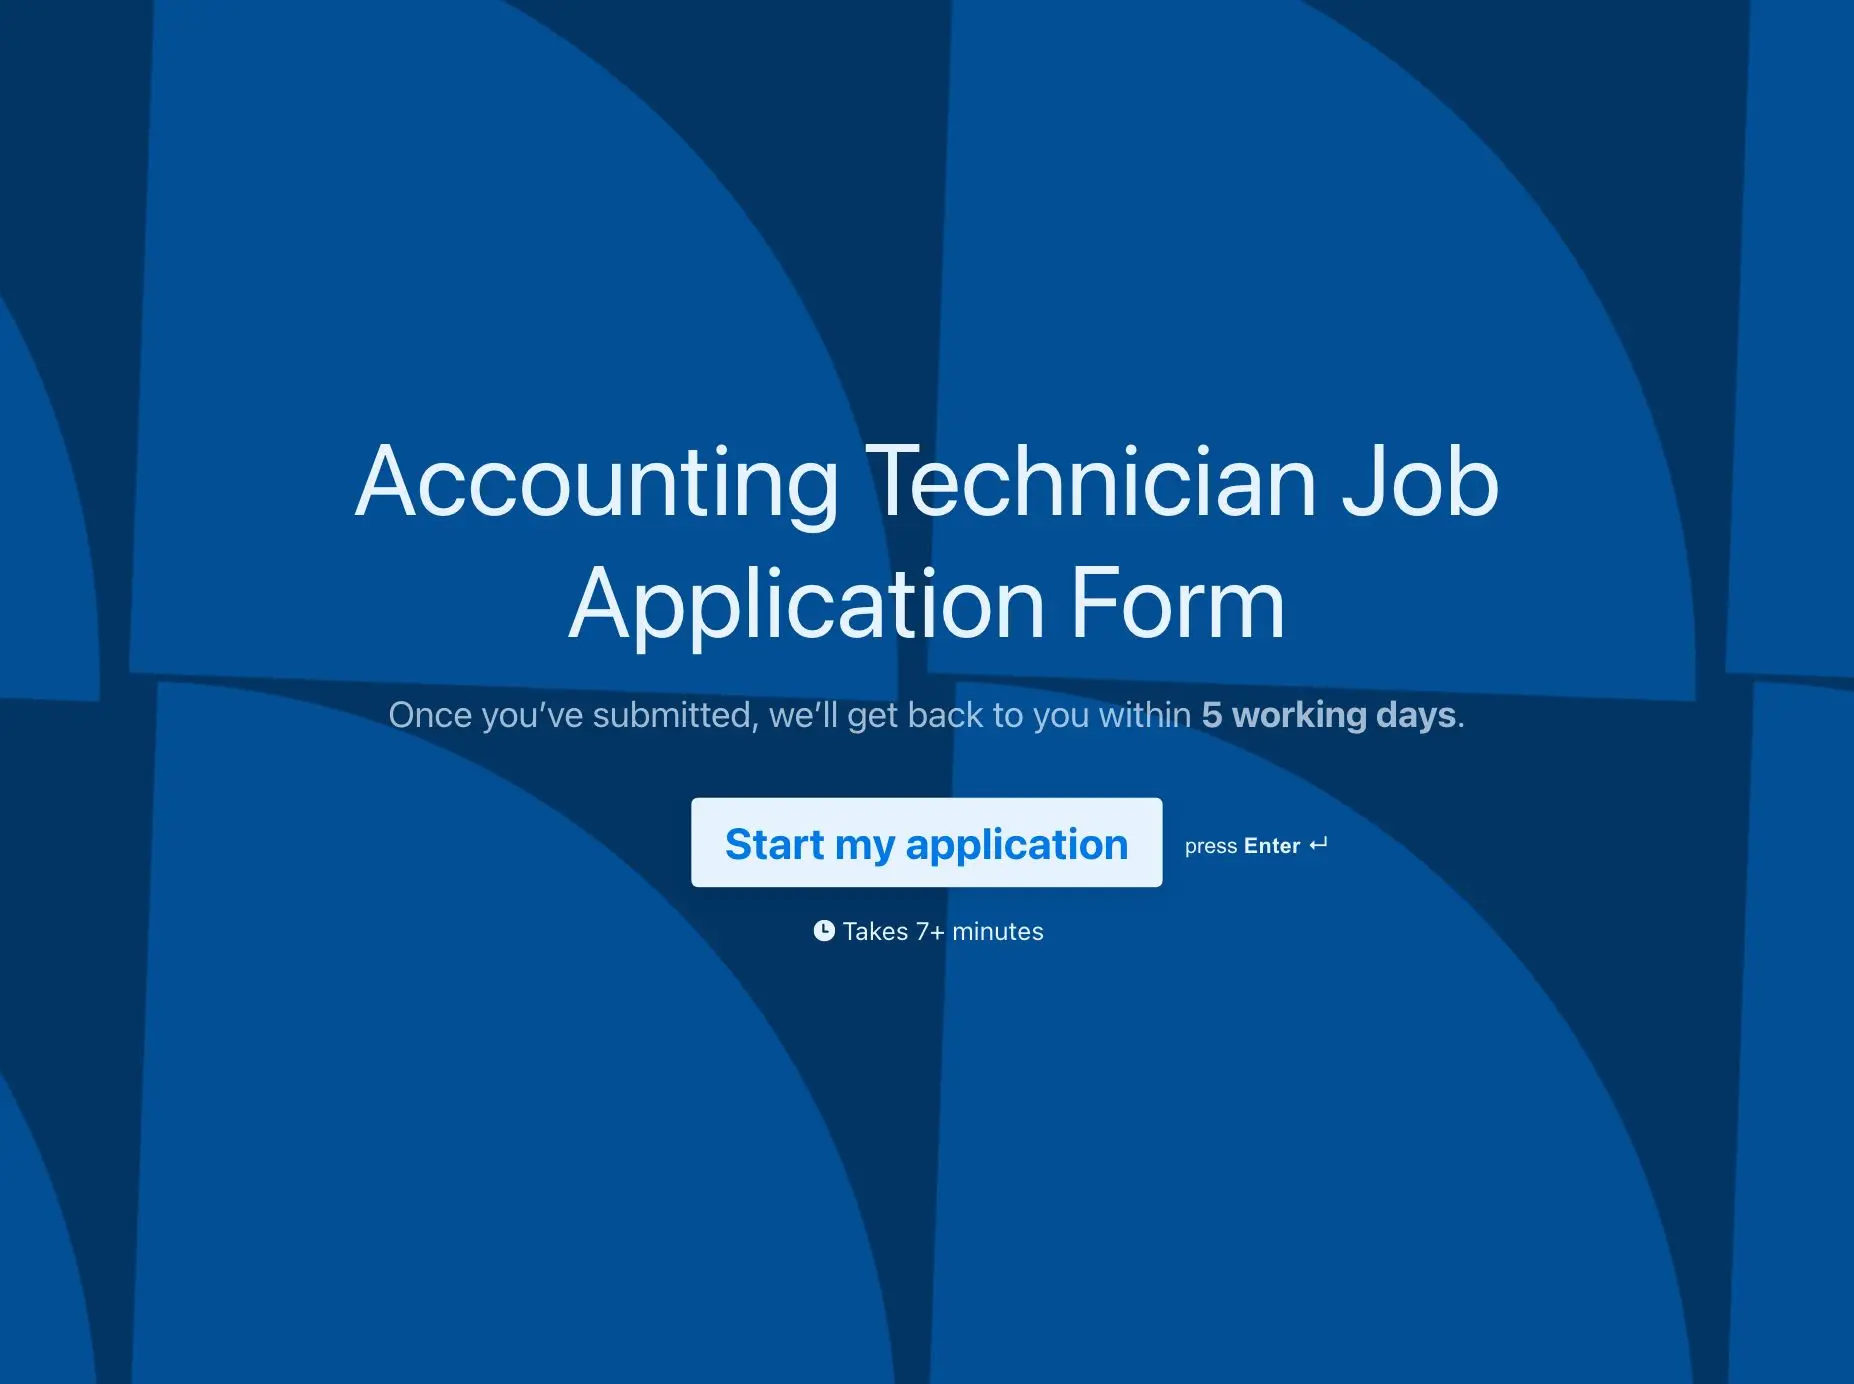 Accounting Technician Job Application Form Template Hero